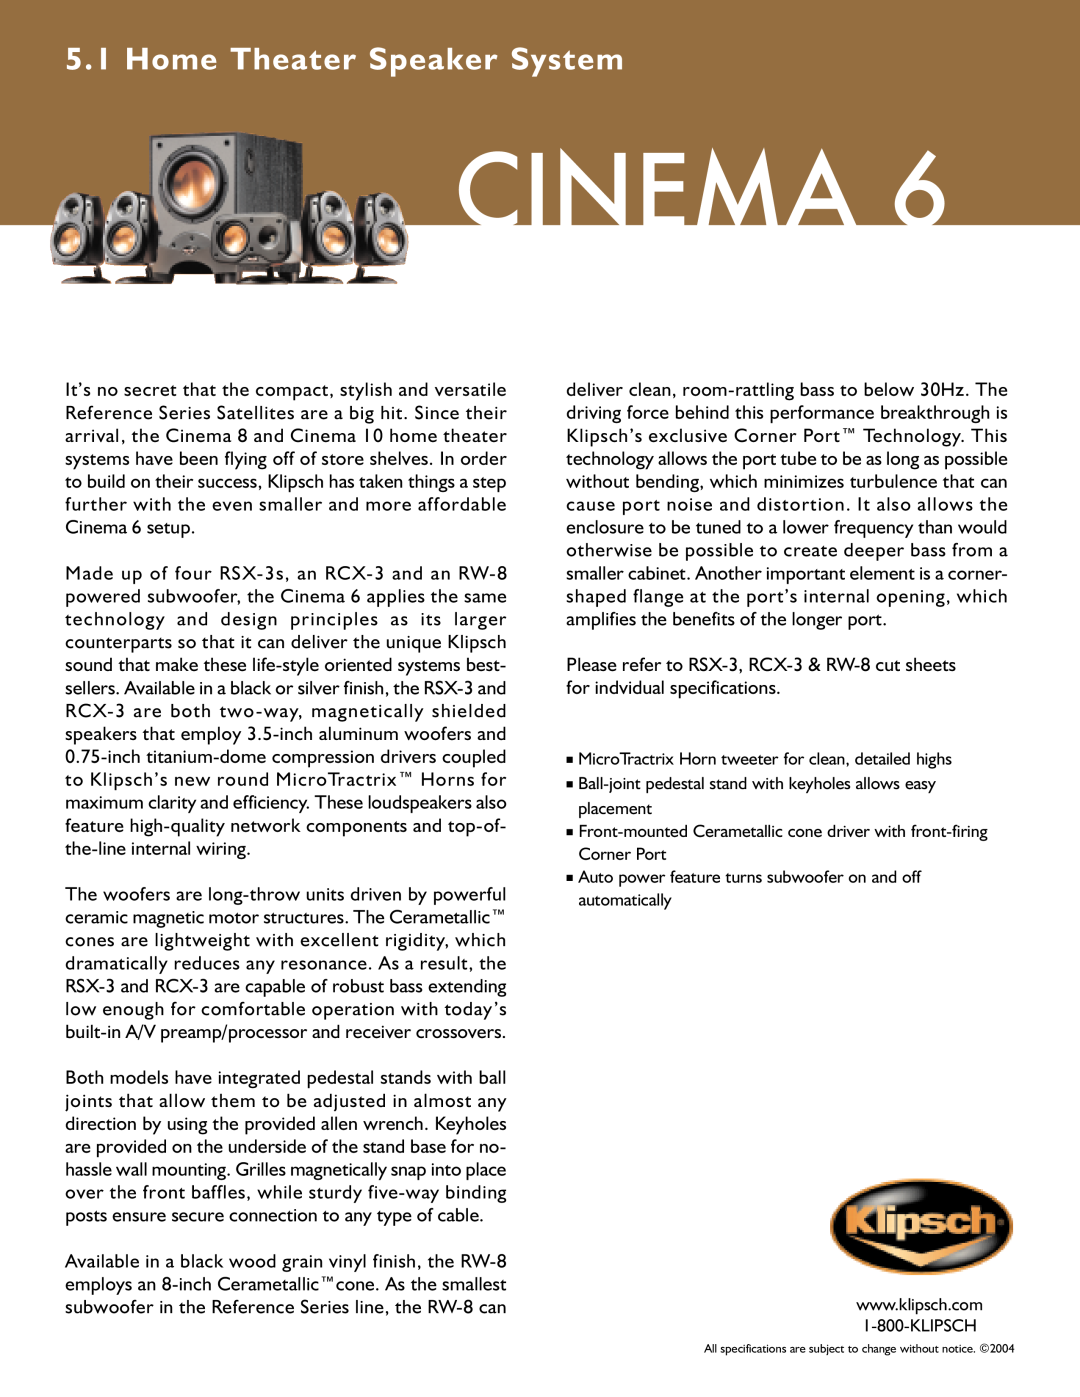 Klipsch 6 specifications Cinema, Home Theater Speaker System 